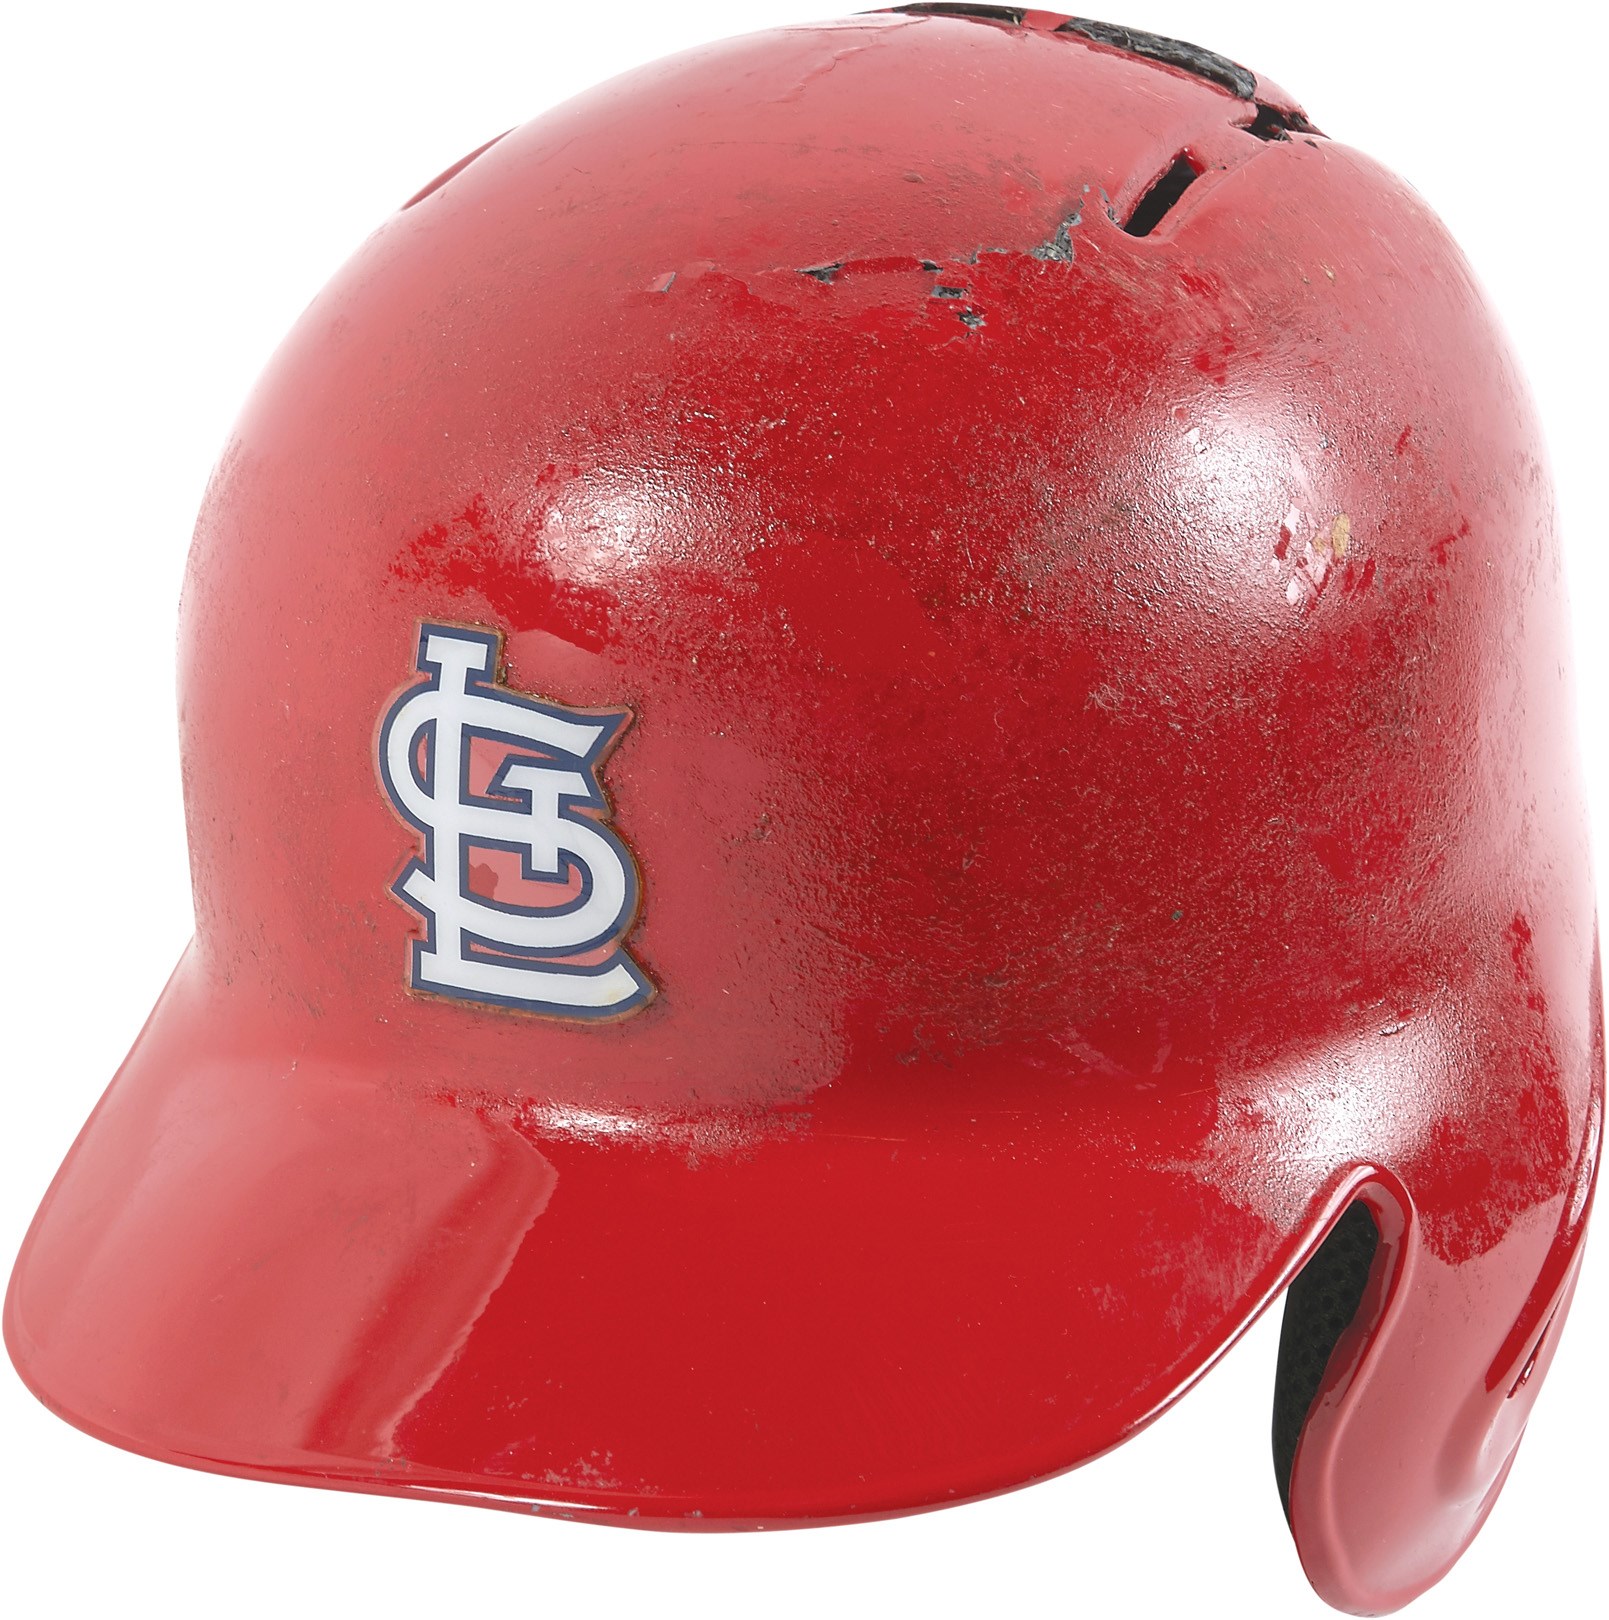 St. Louis Cardinals - 2014 Yadier Molina Game Worn Cardinals Batting Helmet - Photo-Matched (Resolution Photomatching LOA)